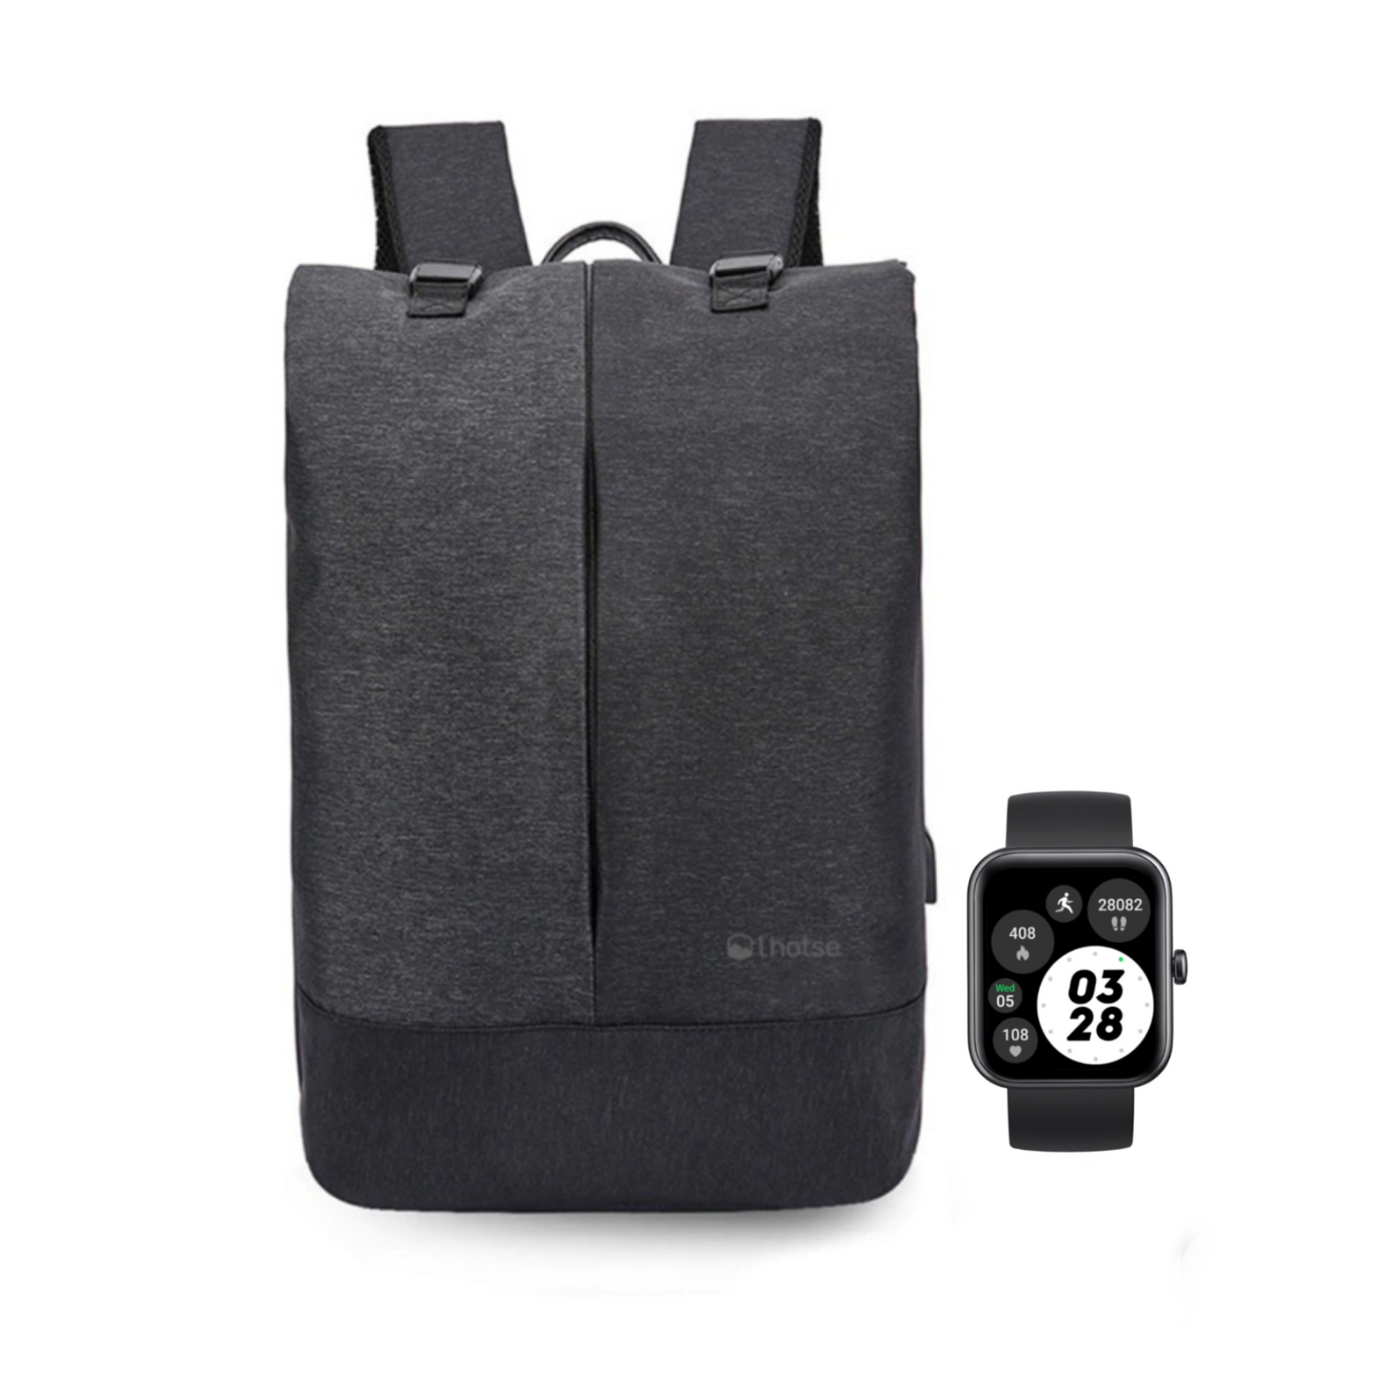 Pack Smartwatch 206 mini Black + Mochila Antirrobo Lhotse